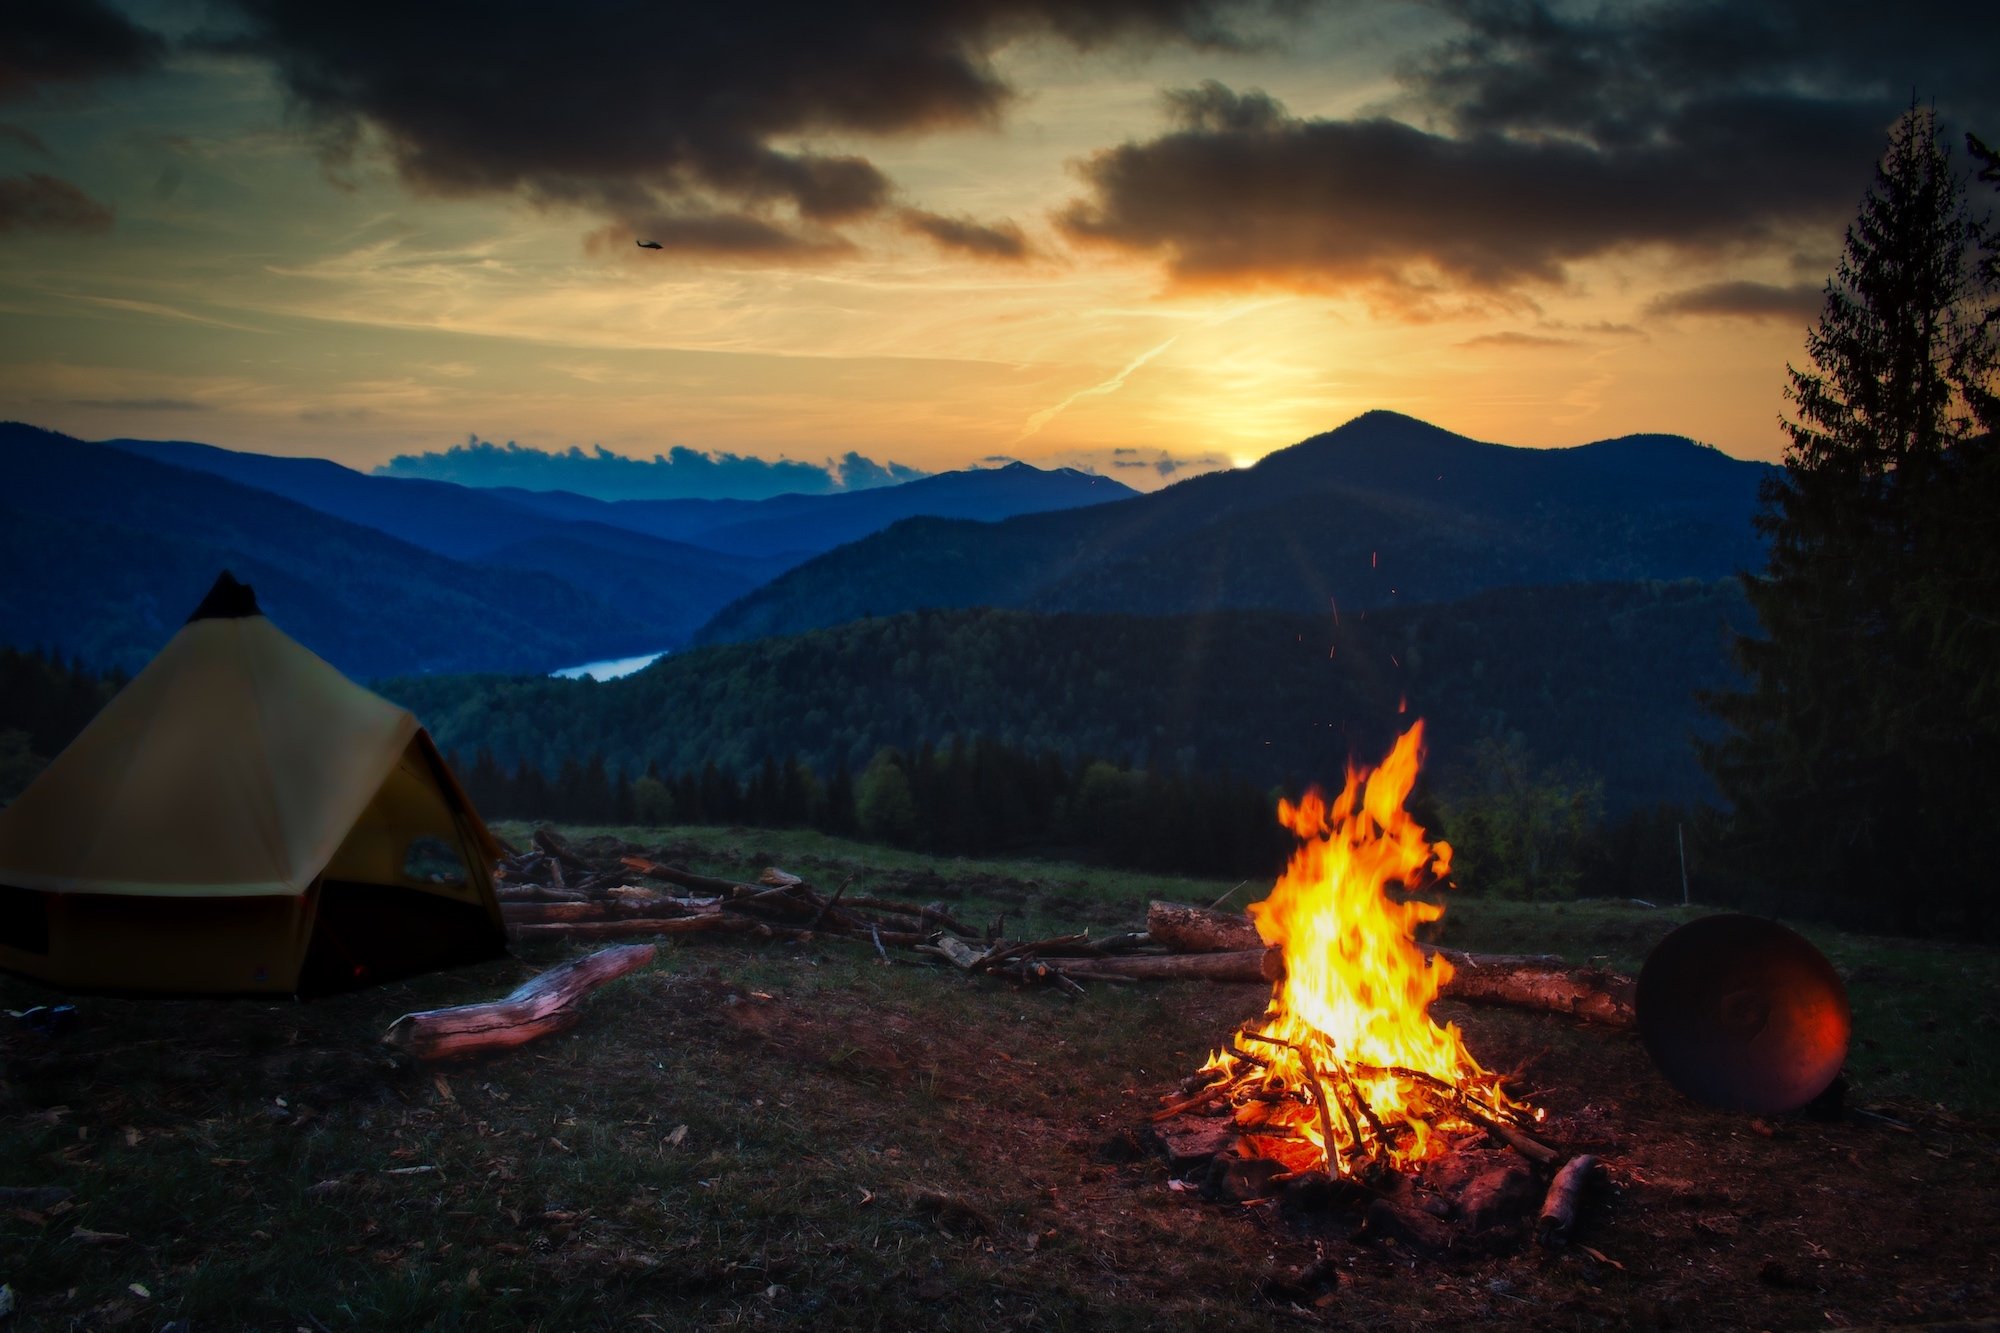 Robens Klondike Grande Tipi tent by a campfire